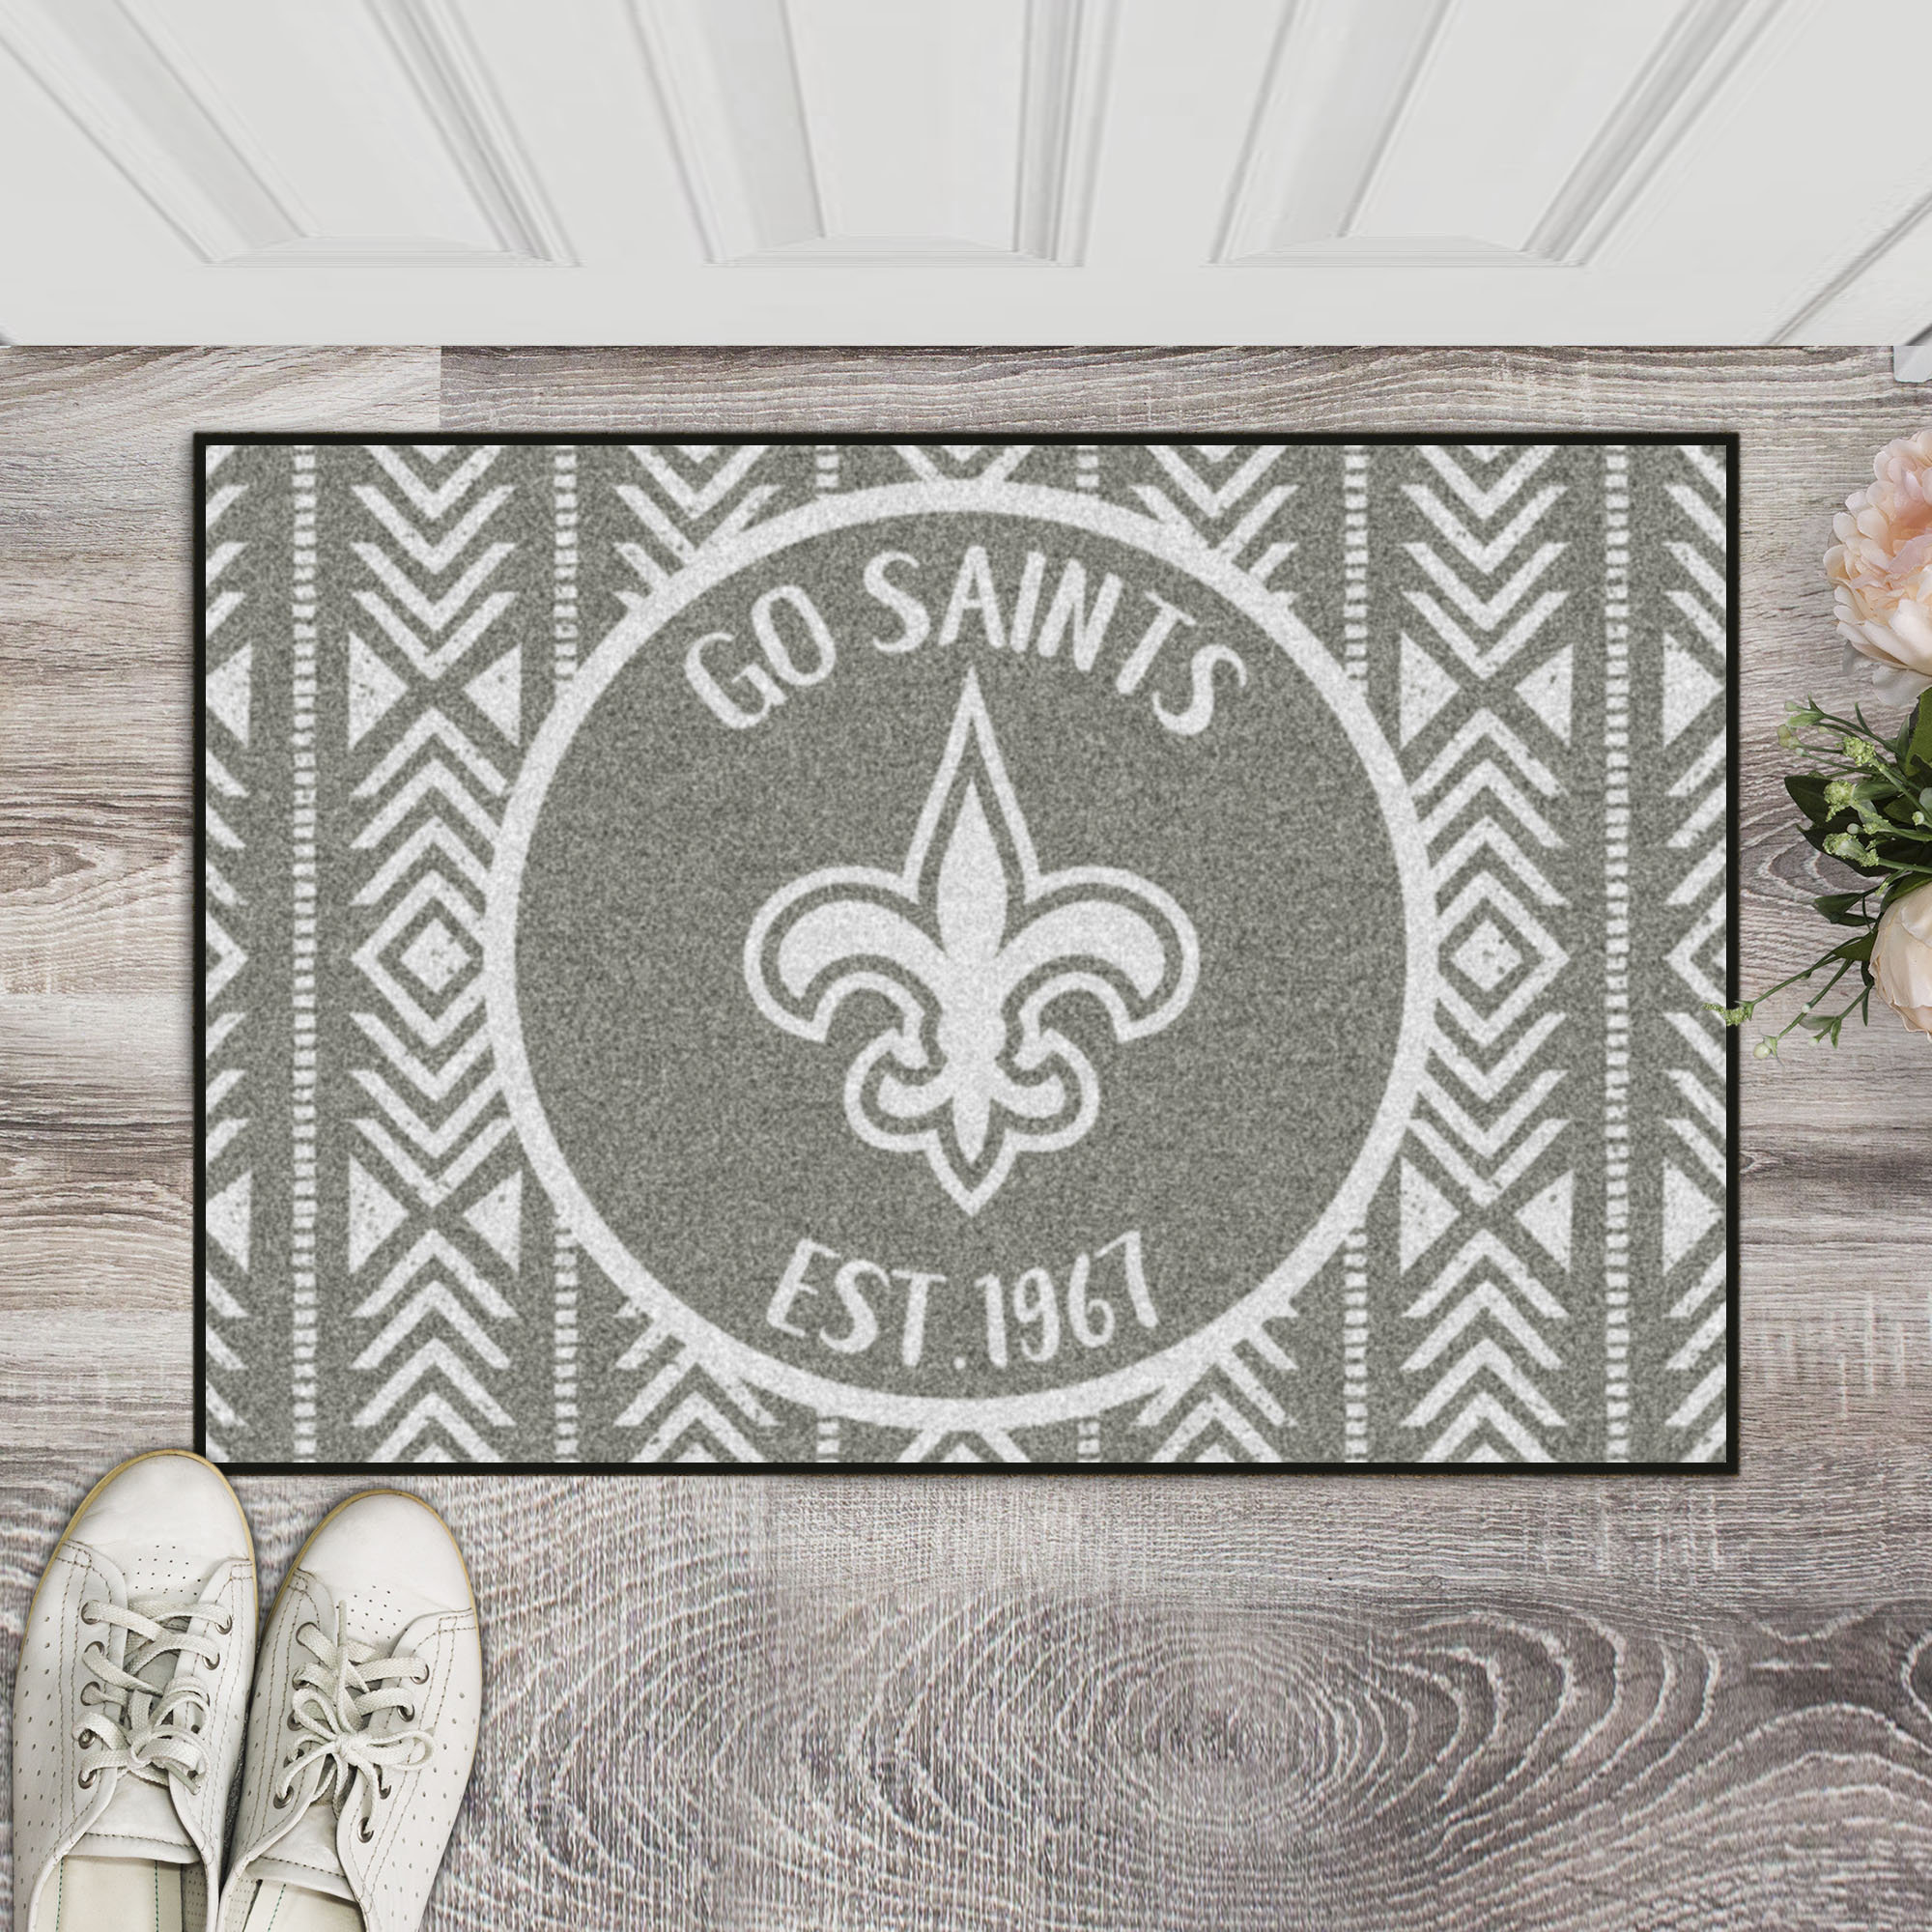 Saints Southern Style Starter Doormat - 19 x 30